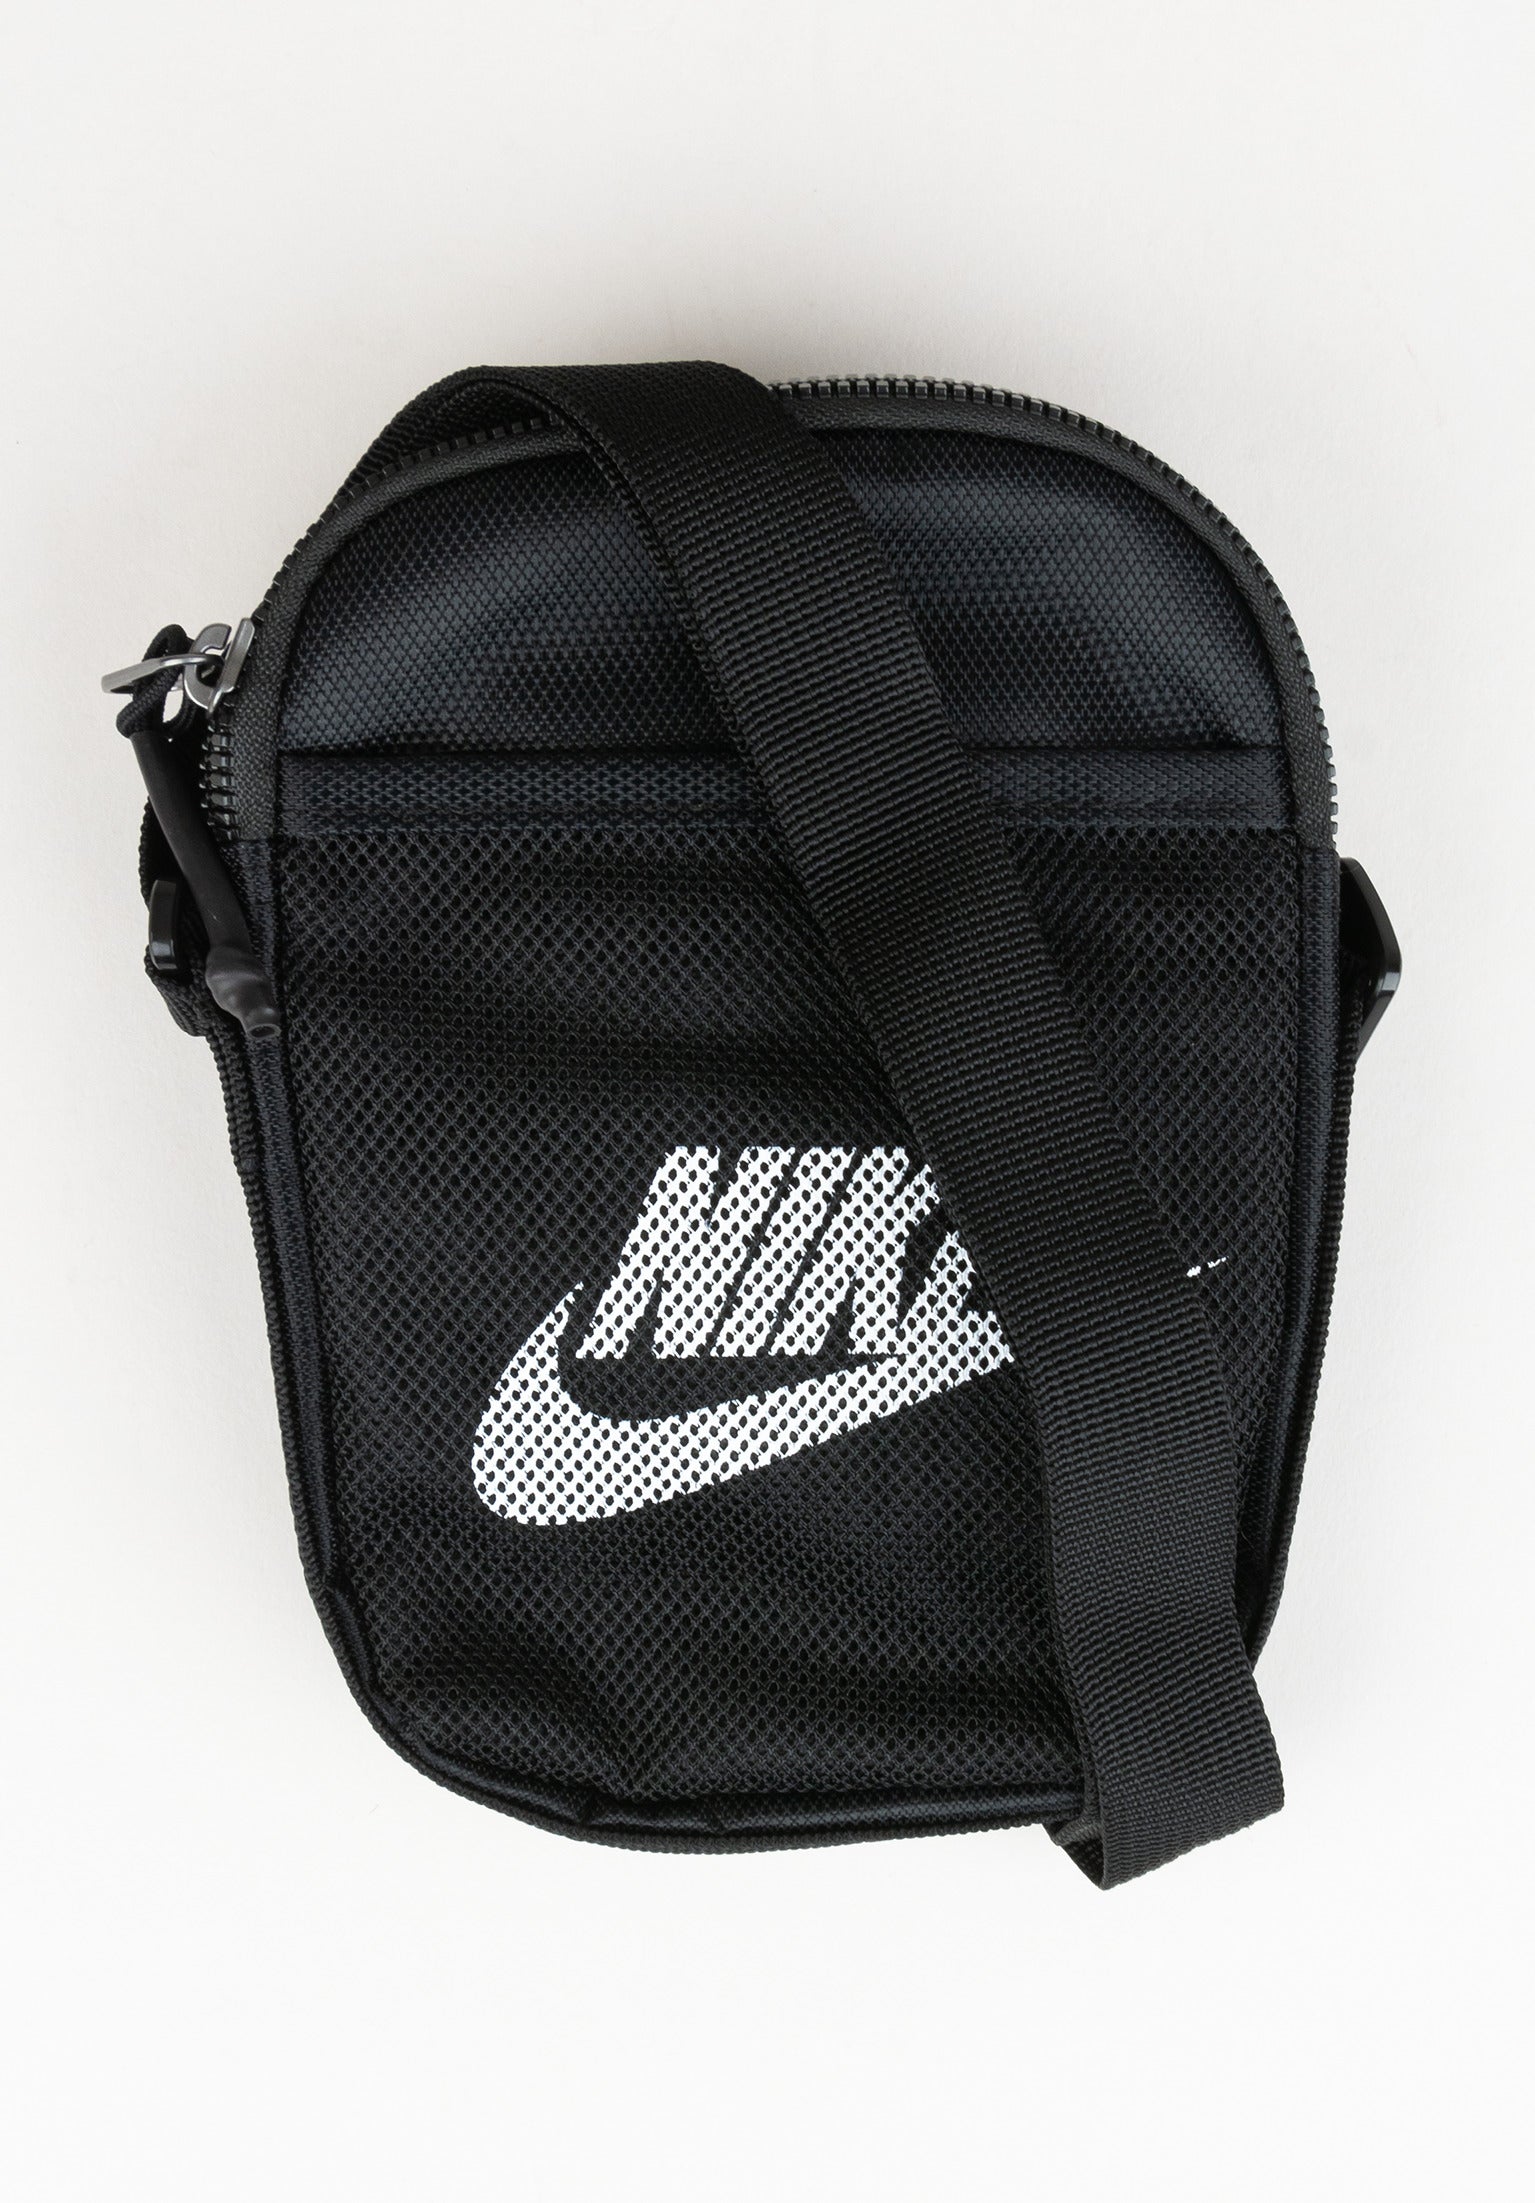 Unboxing The Nike SB Courthouse Backpack 4k - YouTube